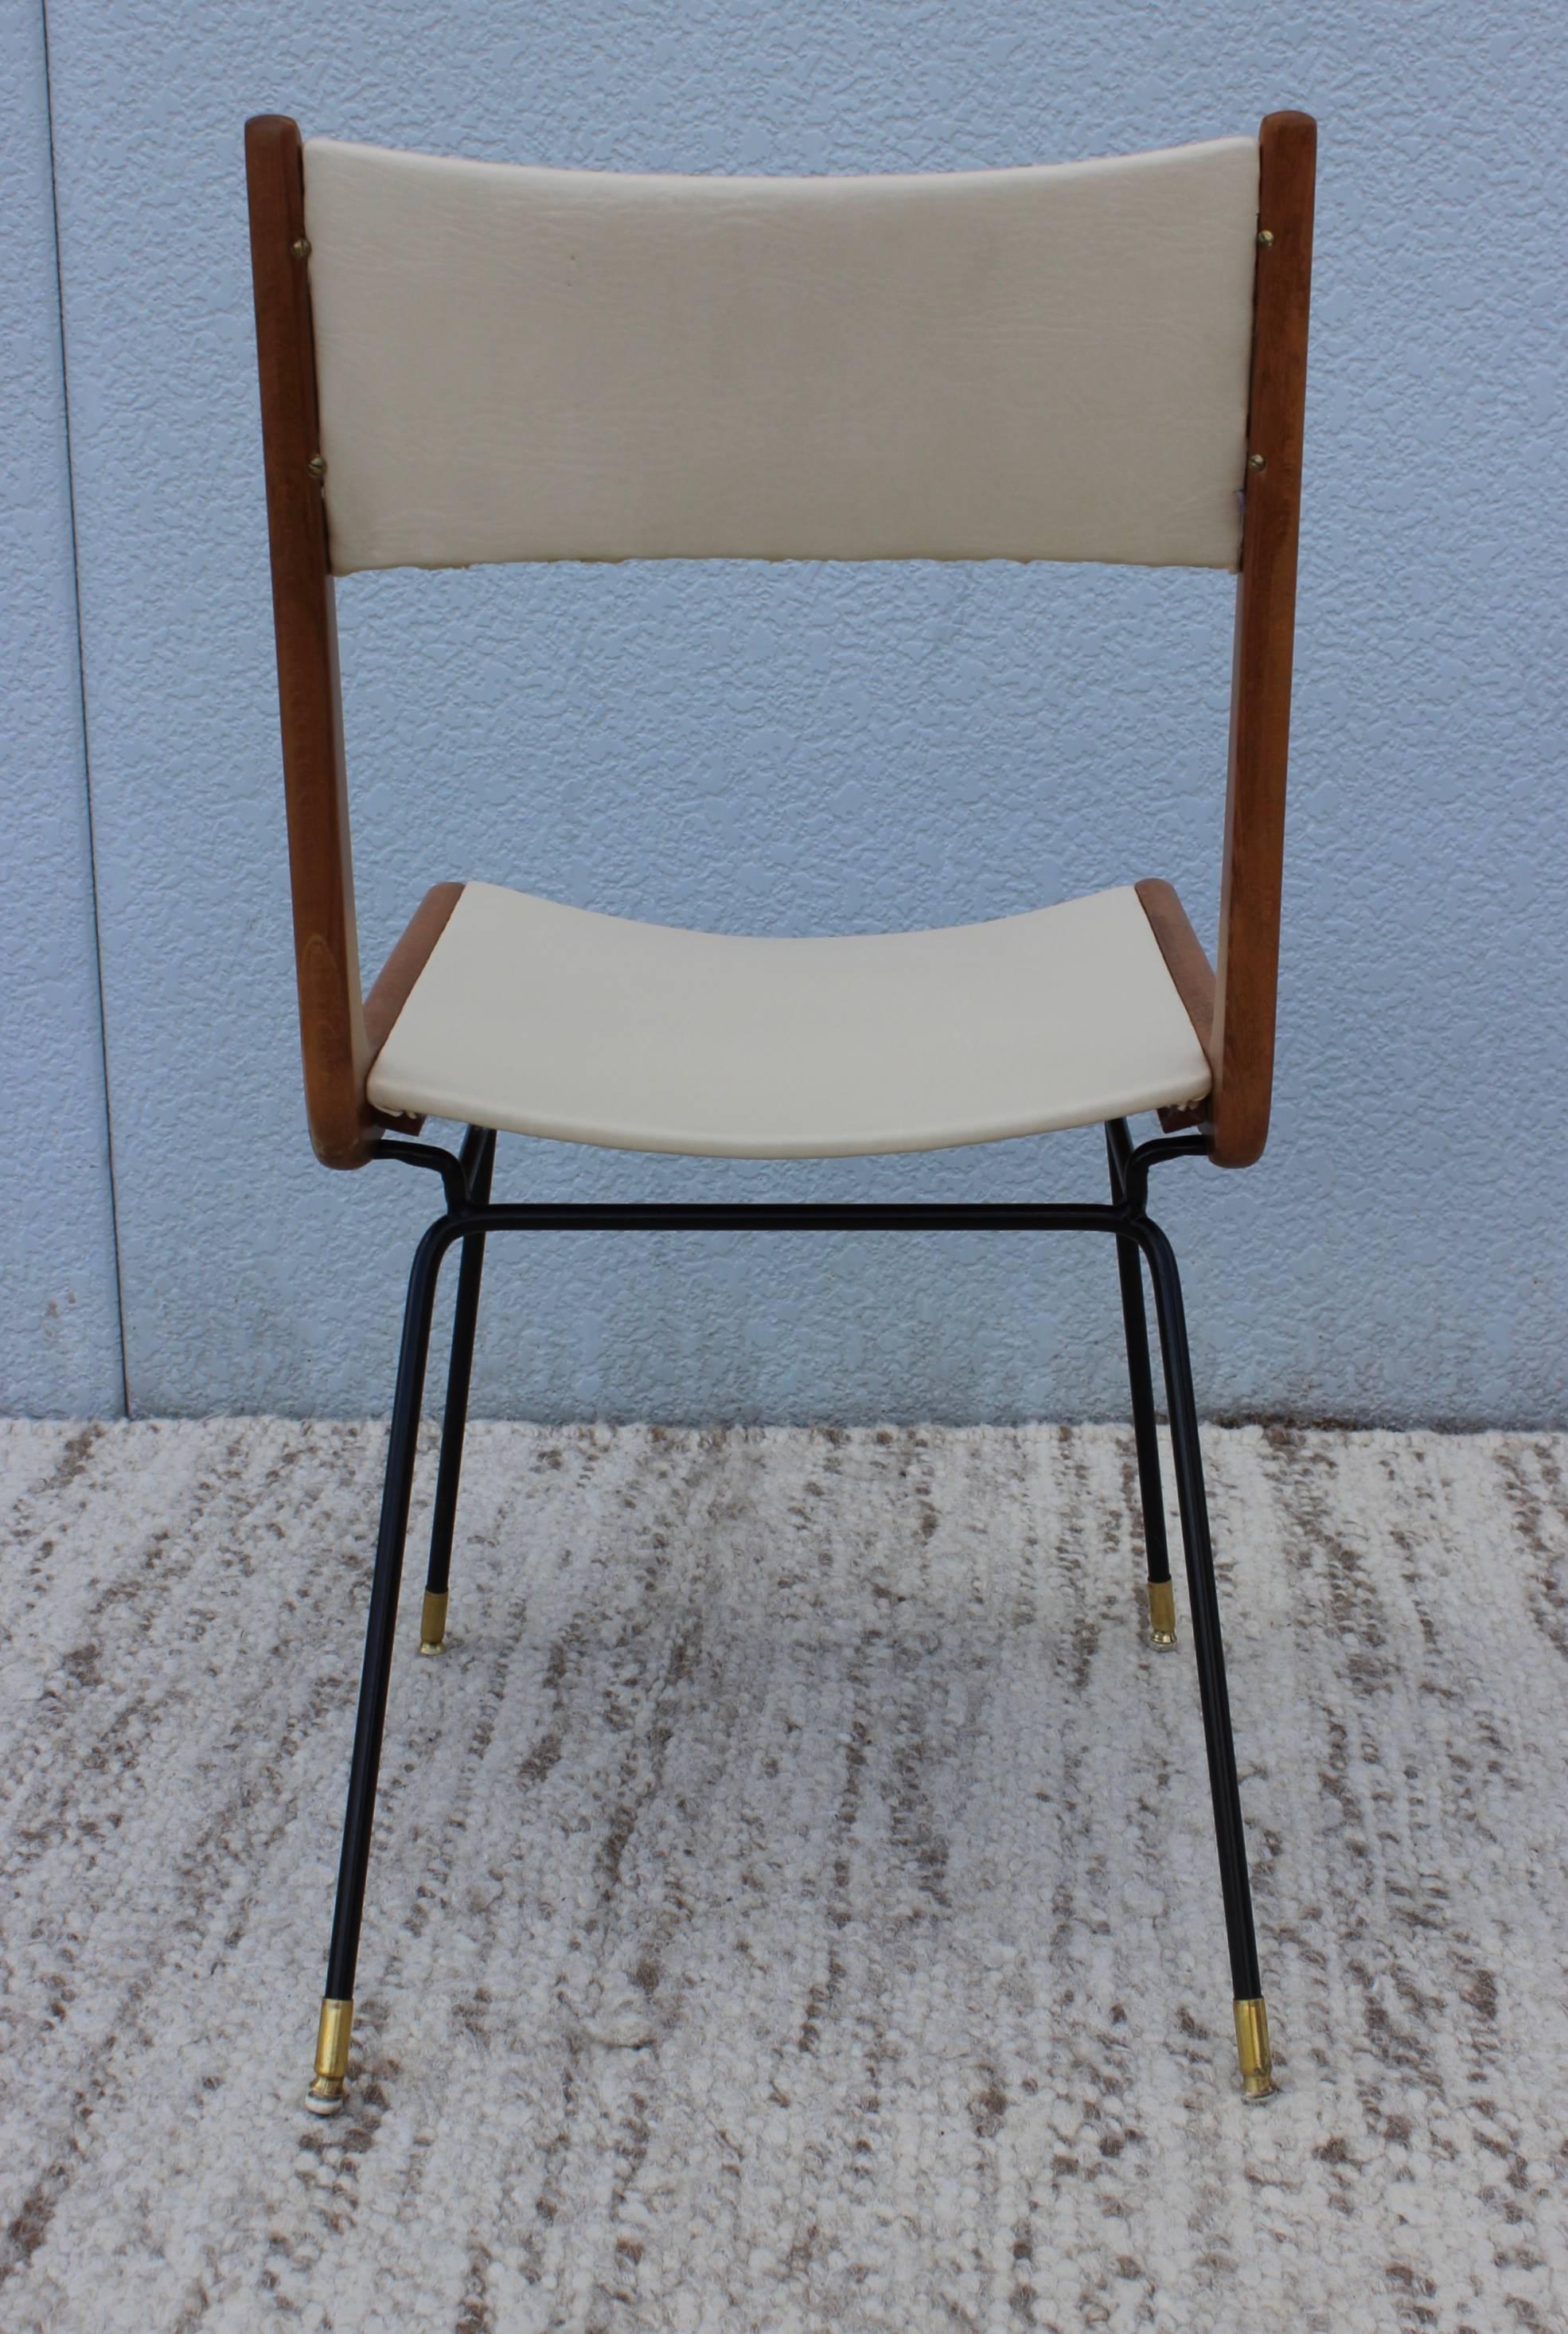 Brass Dining Chairs, style of Carlo di Carli, ca. 1958